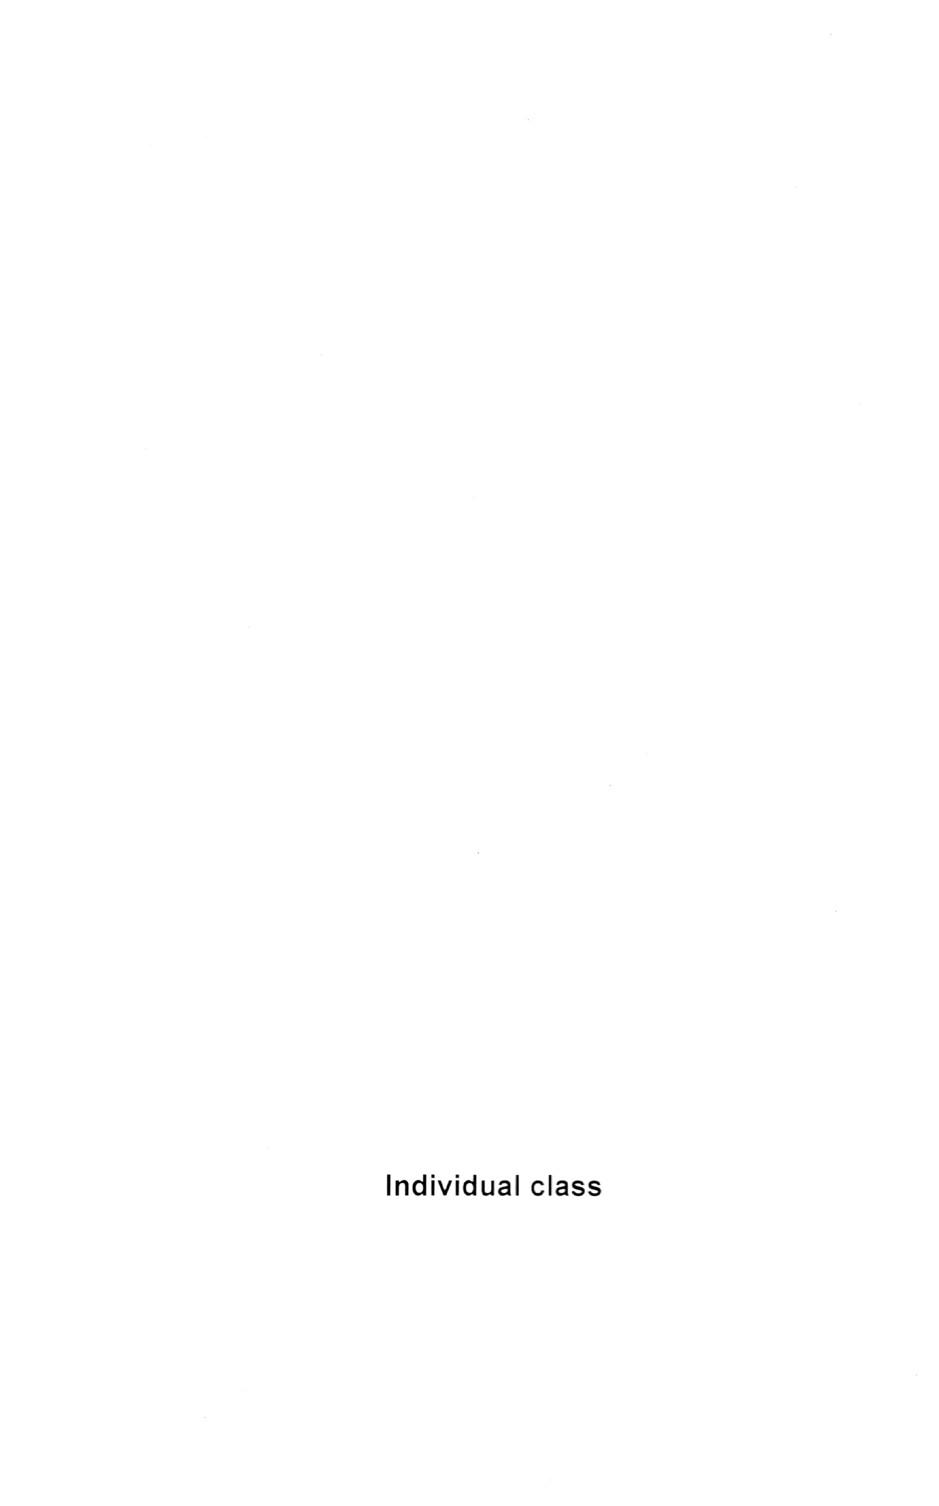 INDIVIDUAL CLASS 2